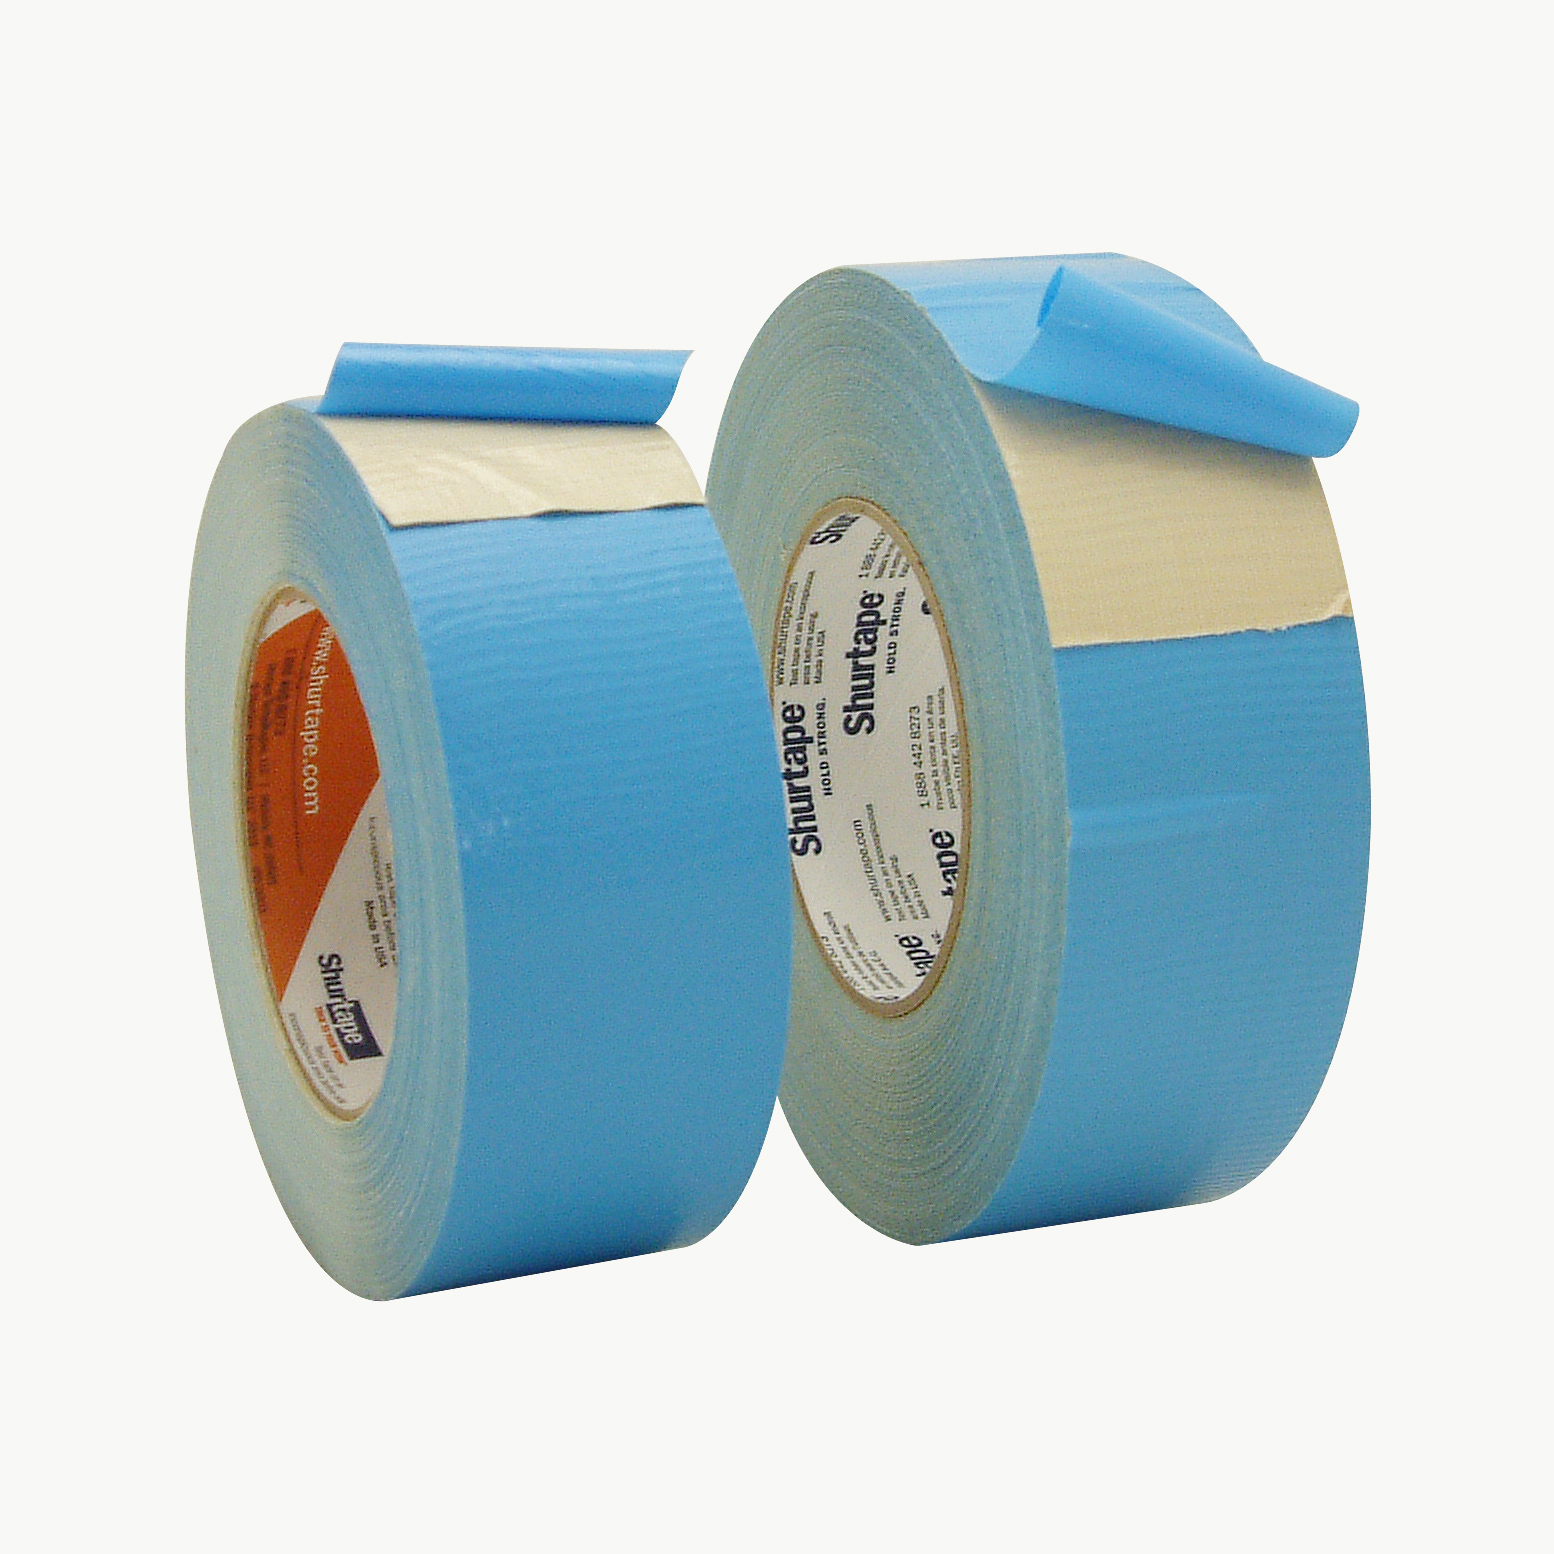 Shurtape DF-545 Double-Sided Cloth Carpet Tape